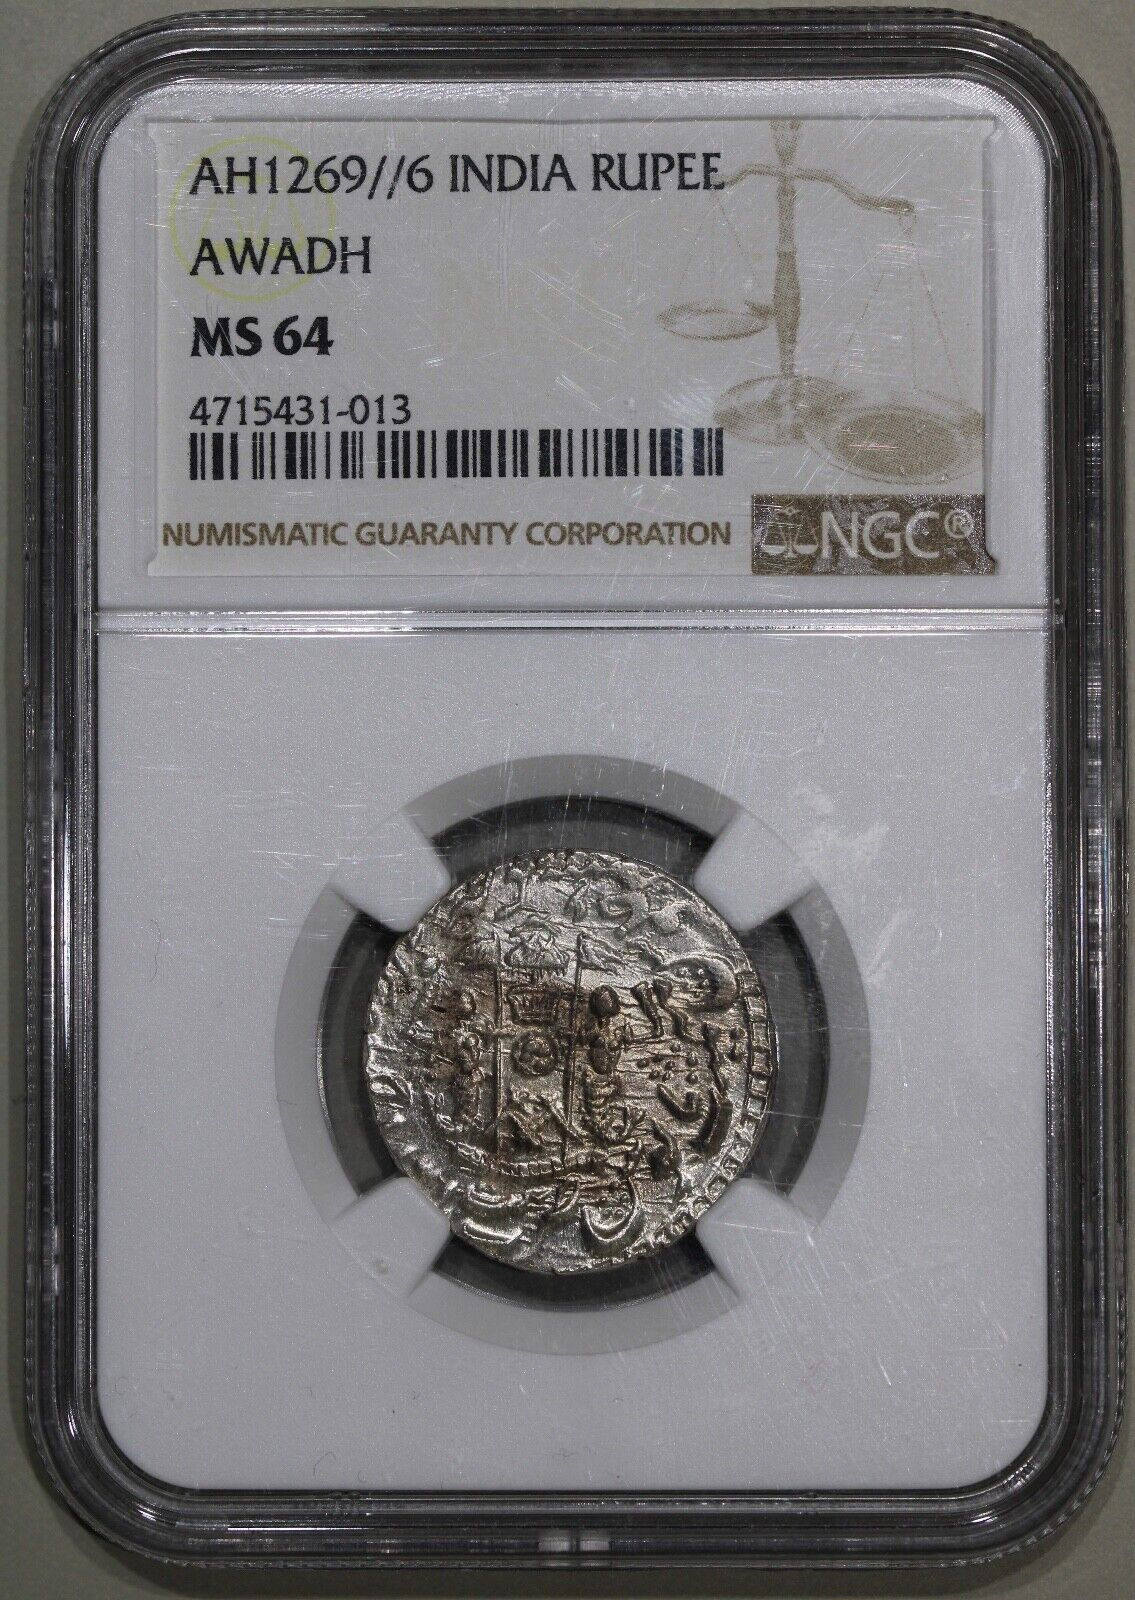 India Silver Rupee Awadh AH1269 6 Antique Coin NGC MS 64 Wajid Ali